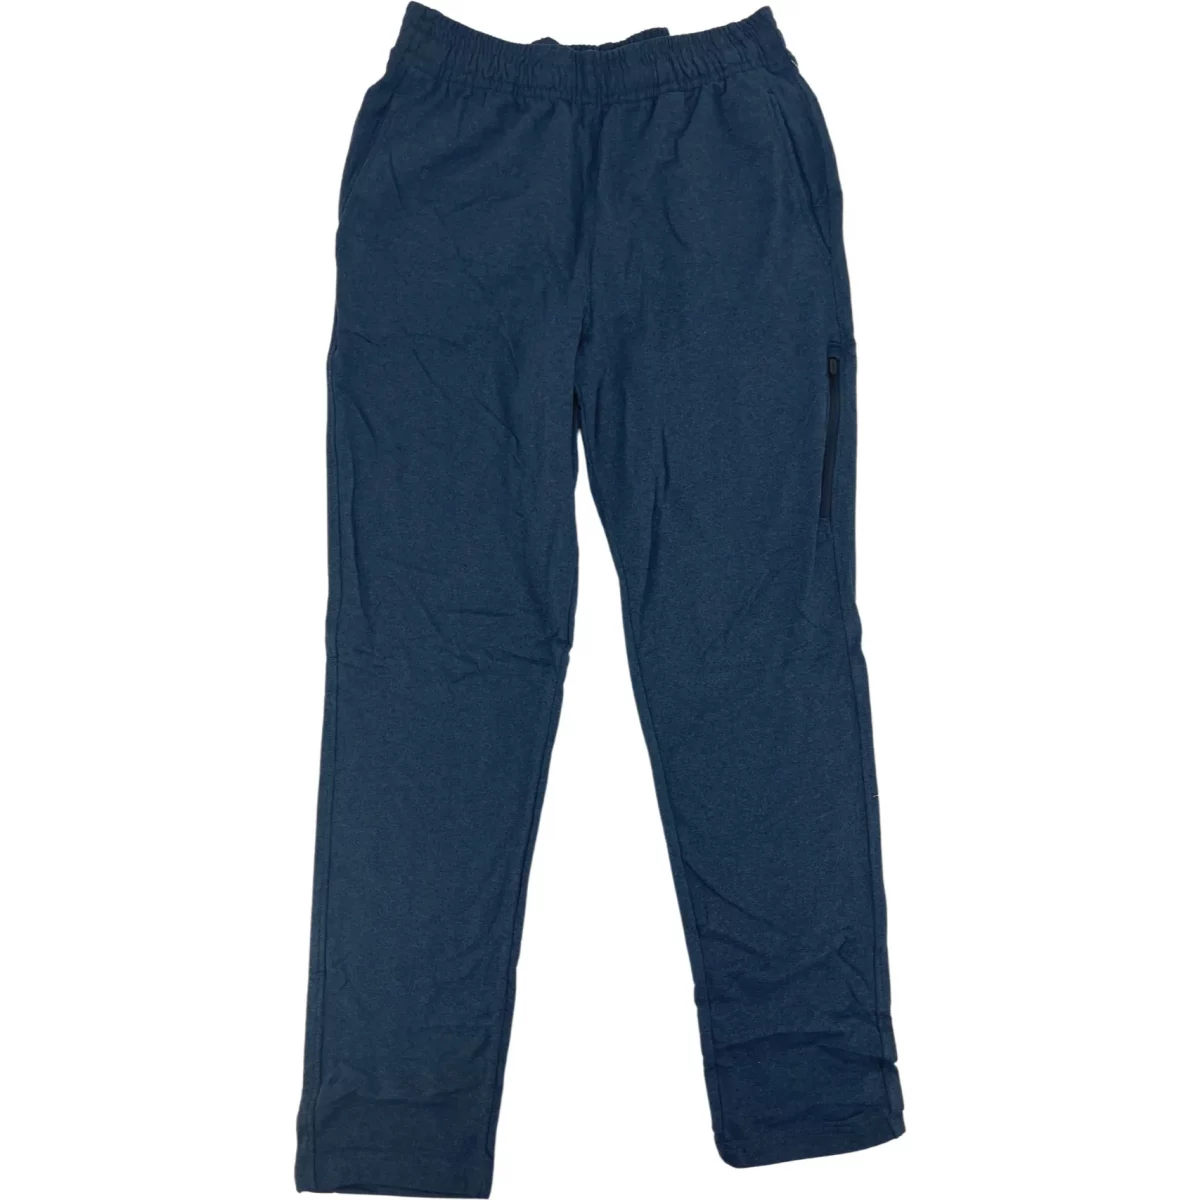 Gaiam Men’s Navy Sweatpants / Size Small